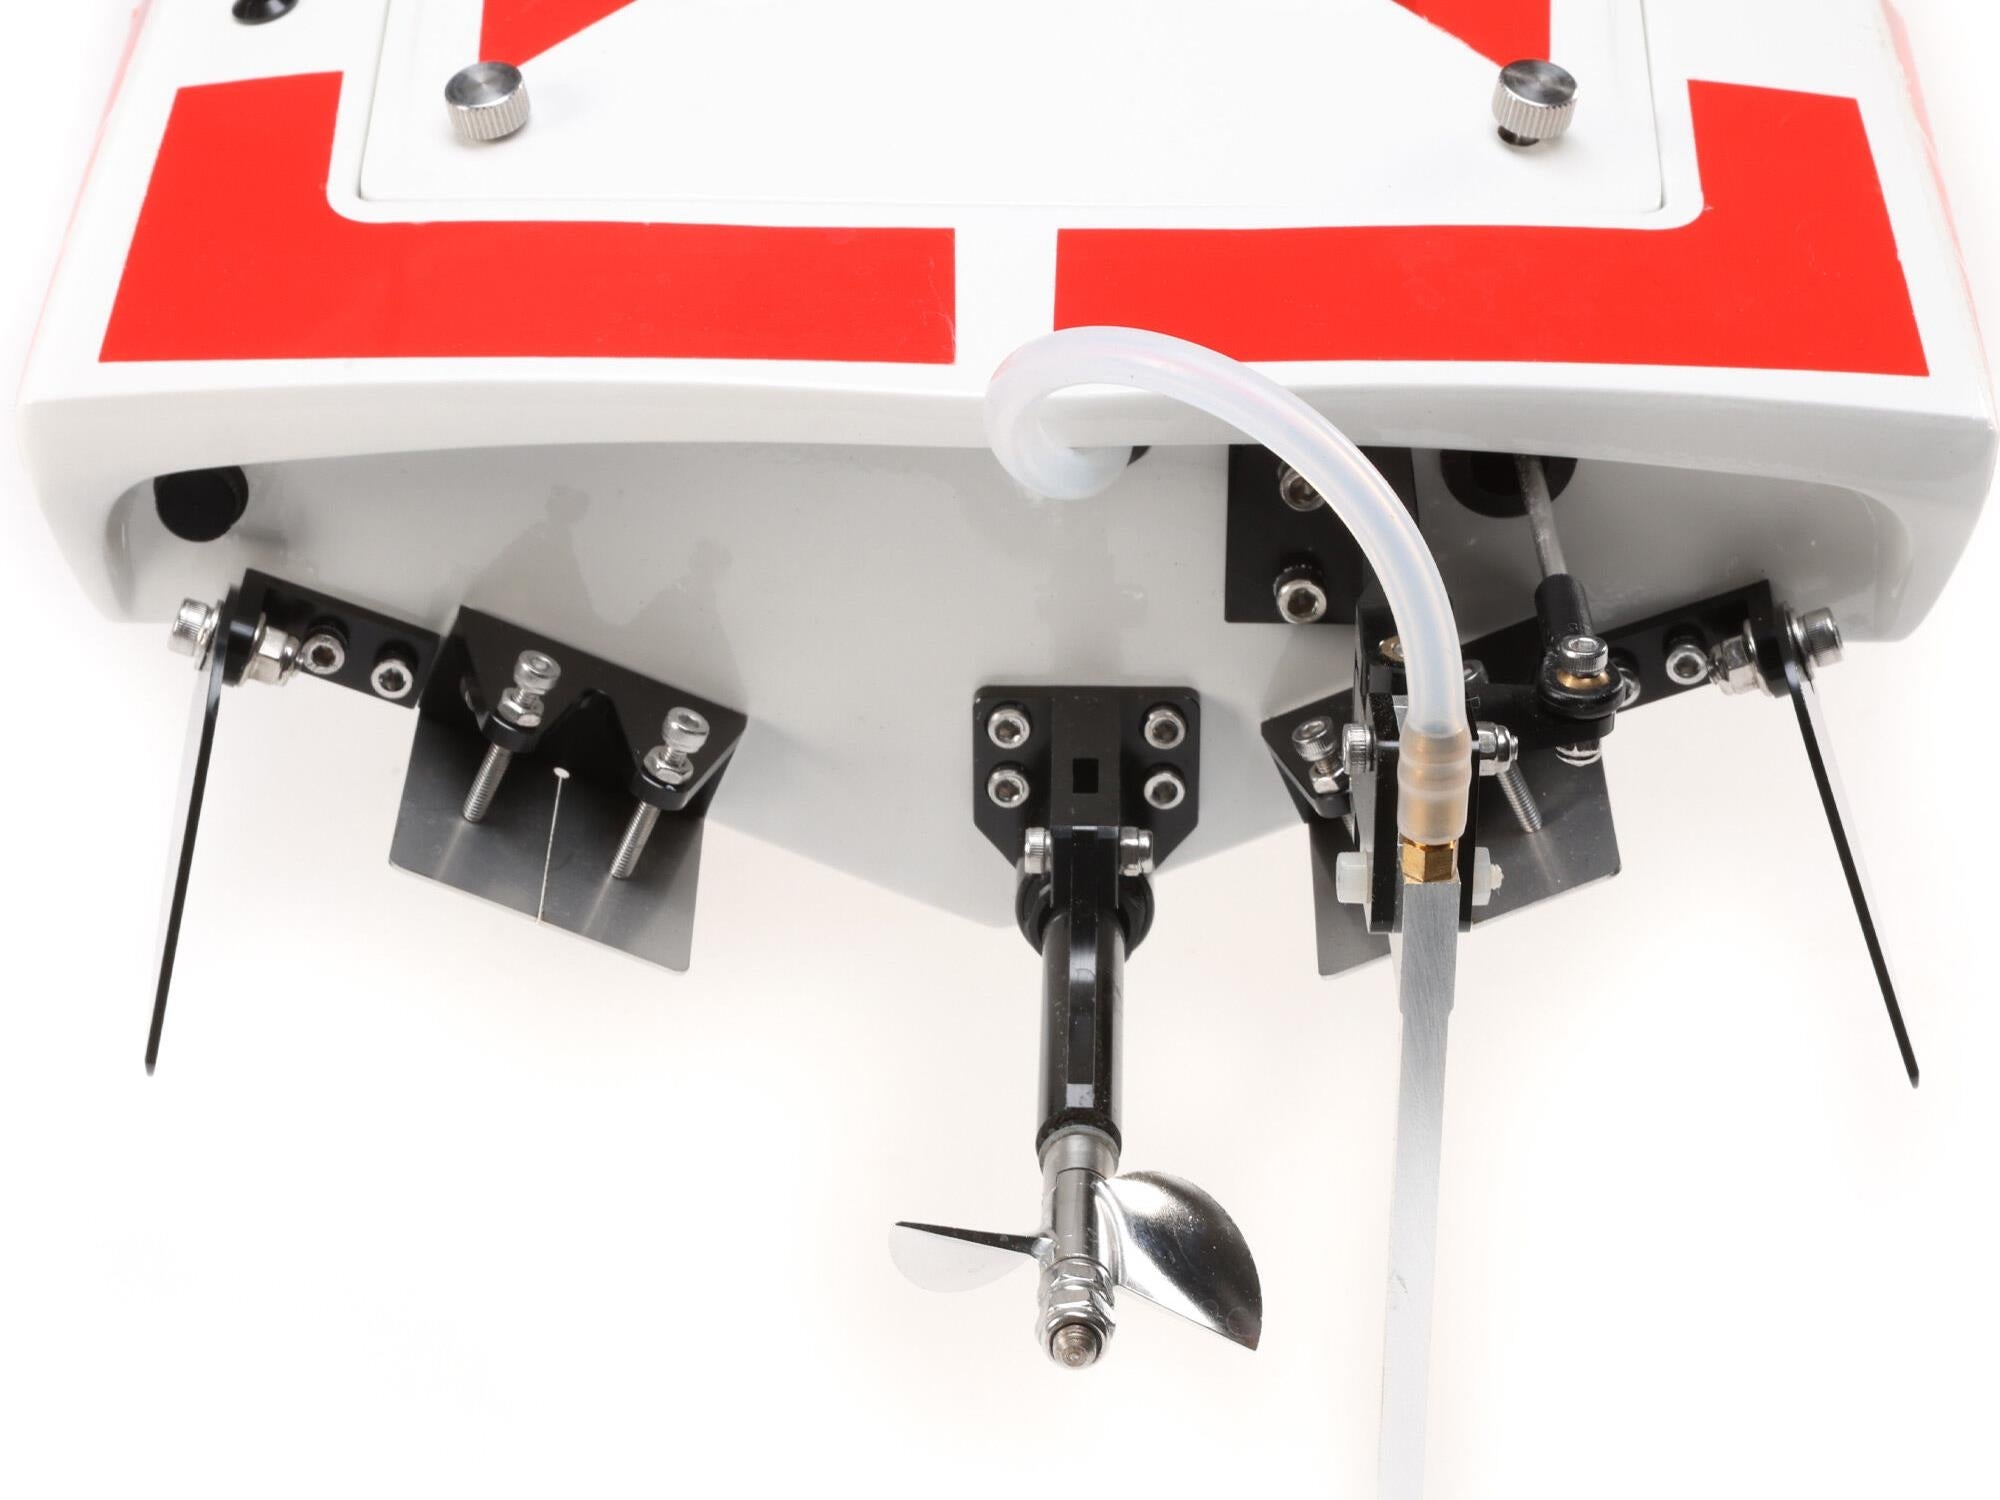 ProBoat Impulse 32" Brushless Deep-V RTR with Smart - White/Red PRB08037T2